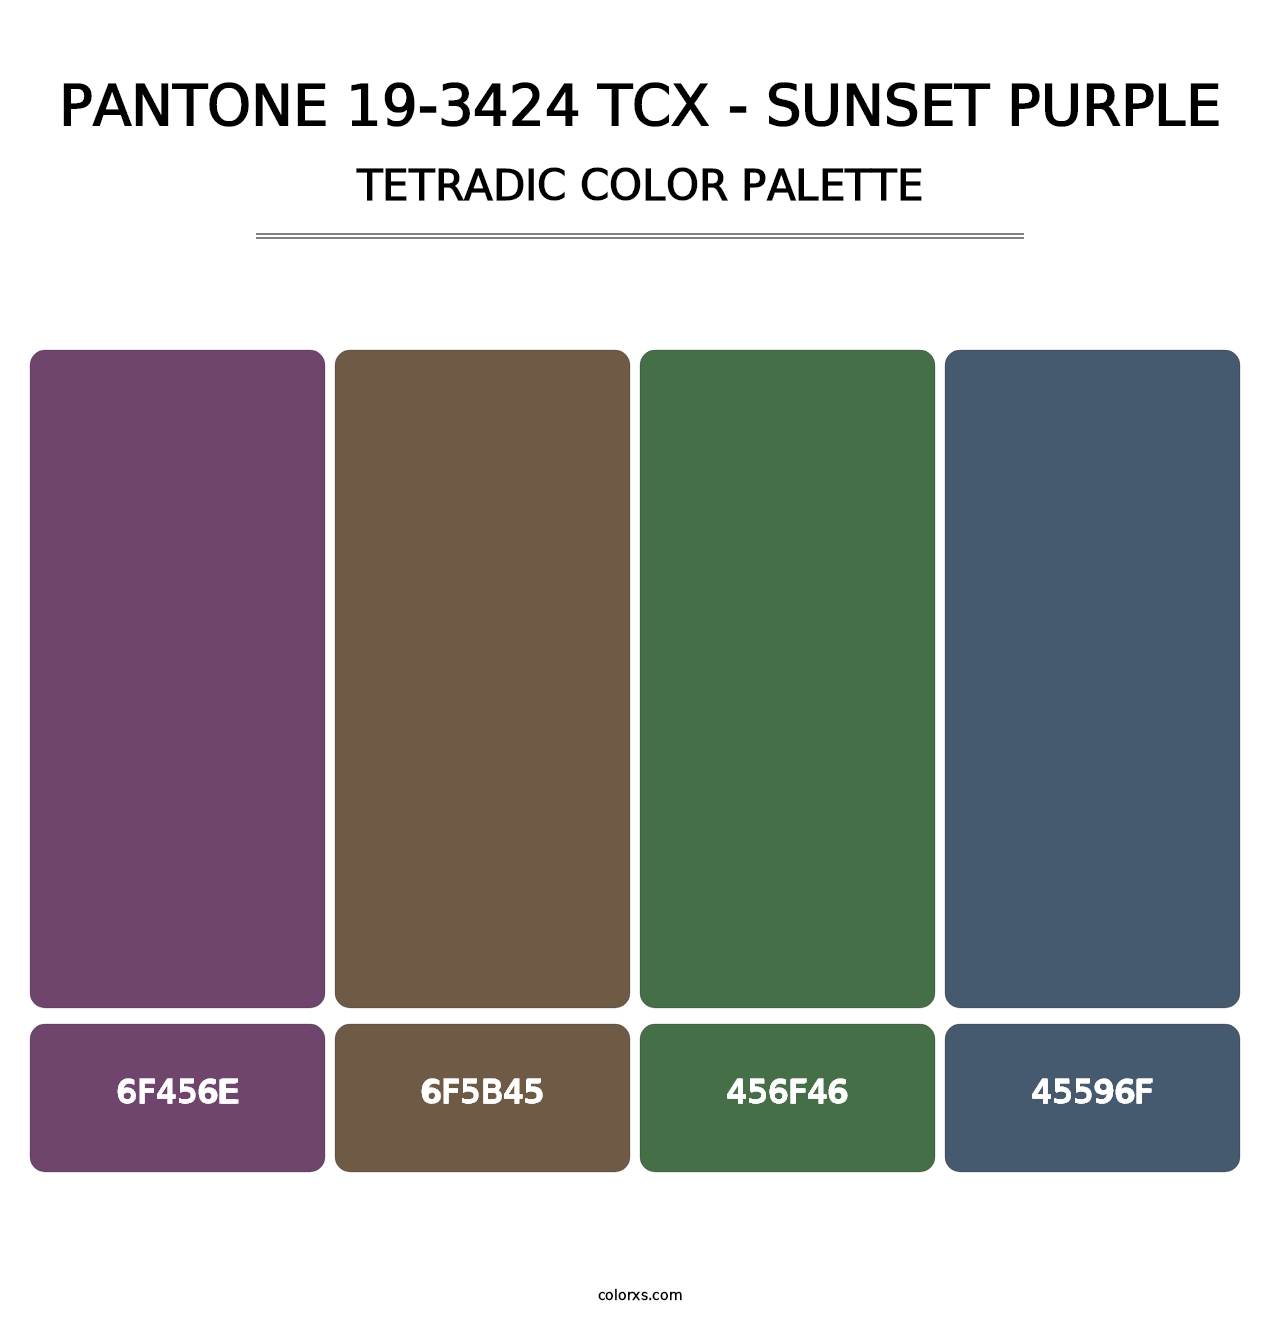 PANTONE 19-3424 TCX - Sunset Purple - Tetradic Color Palette